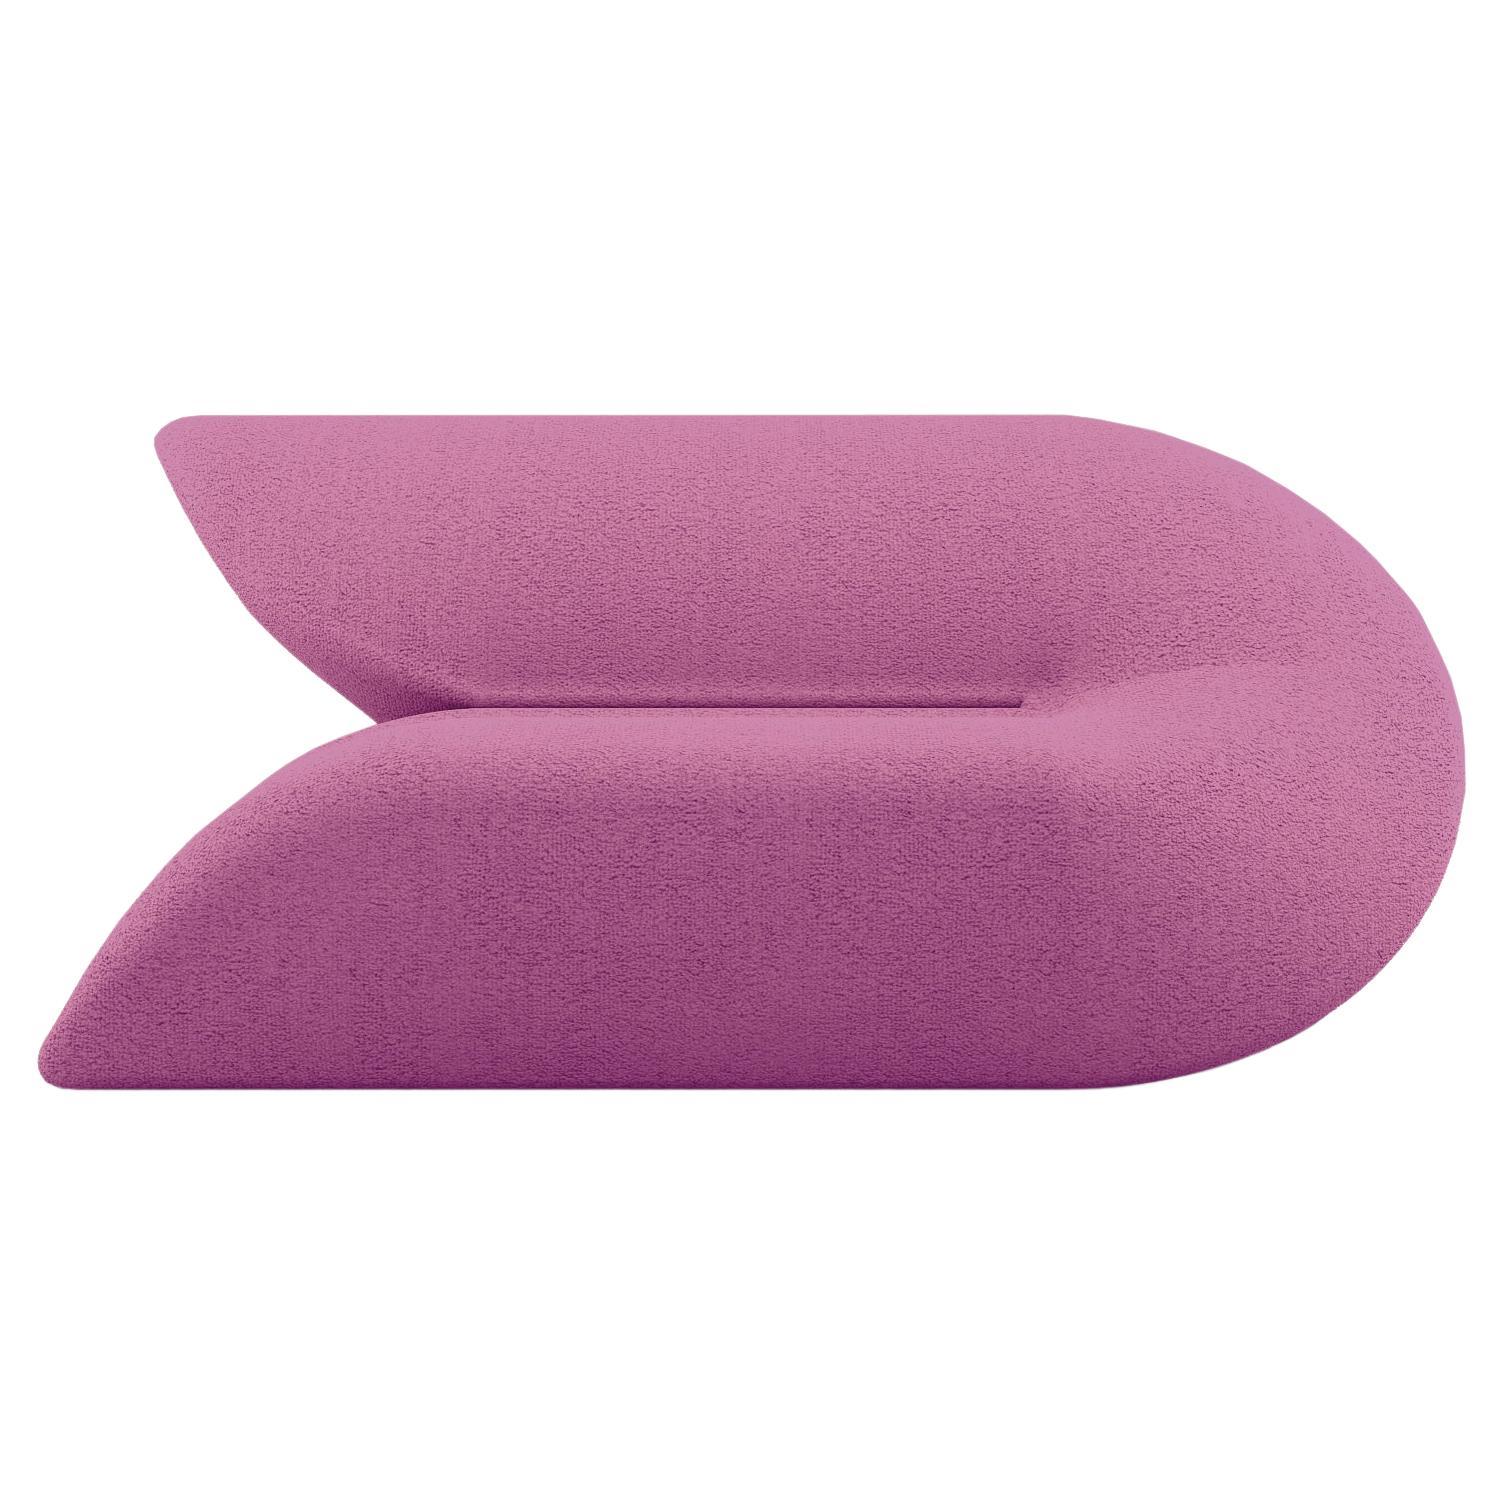 Delta Sofa - Modern Violet Upholstered Two Seat Sofa For Sale